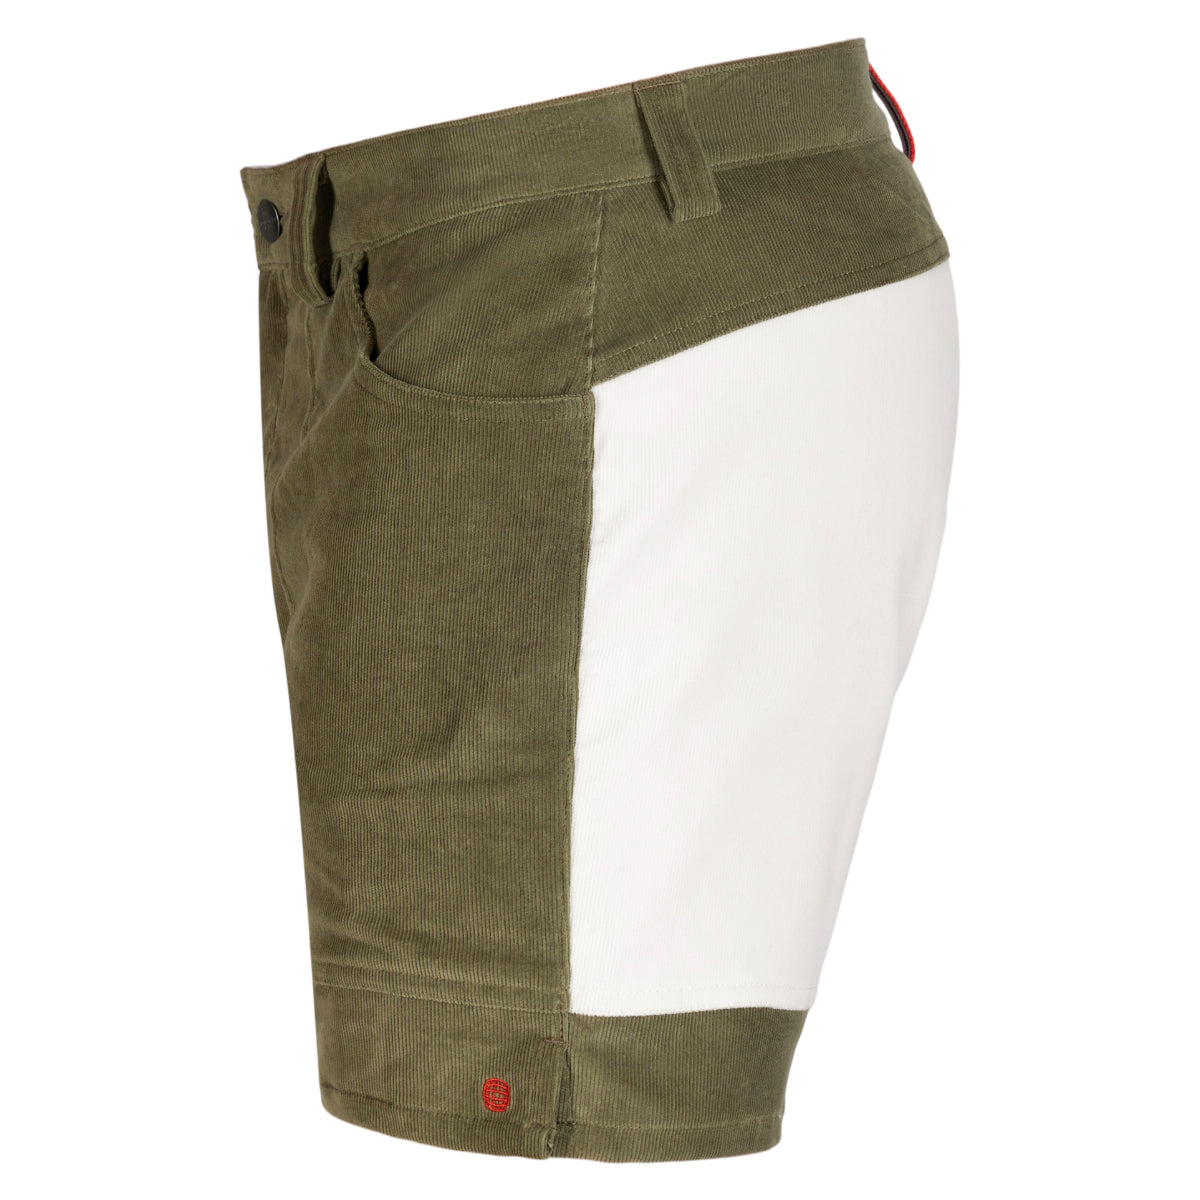 Amundsen Sports - Men's 7 Incher Concord Shorts - Olive Ash / Natural